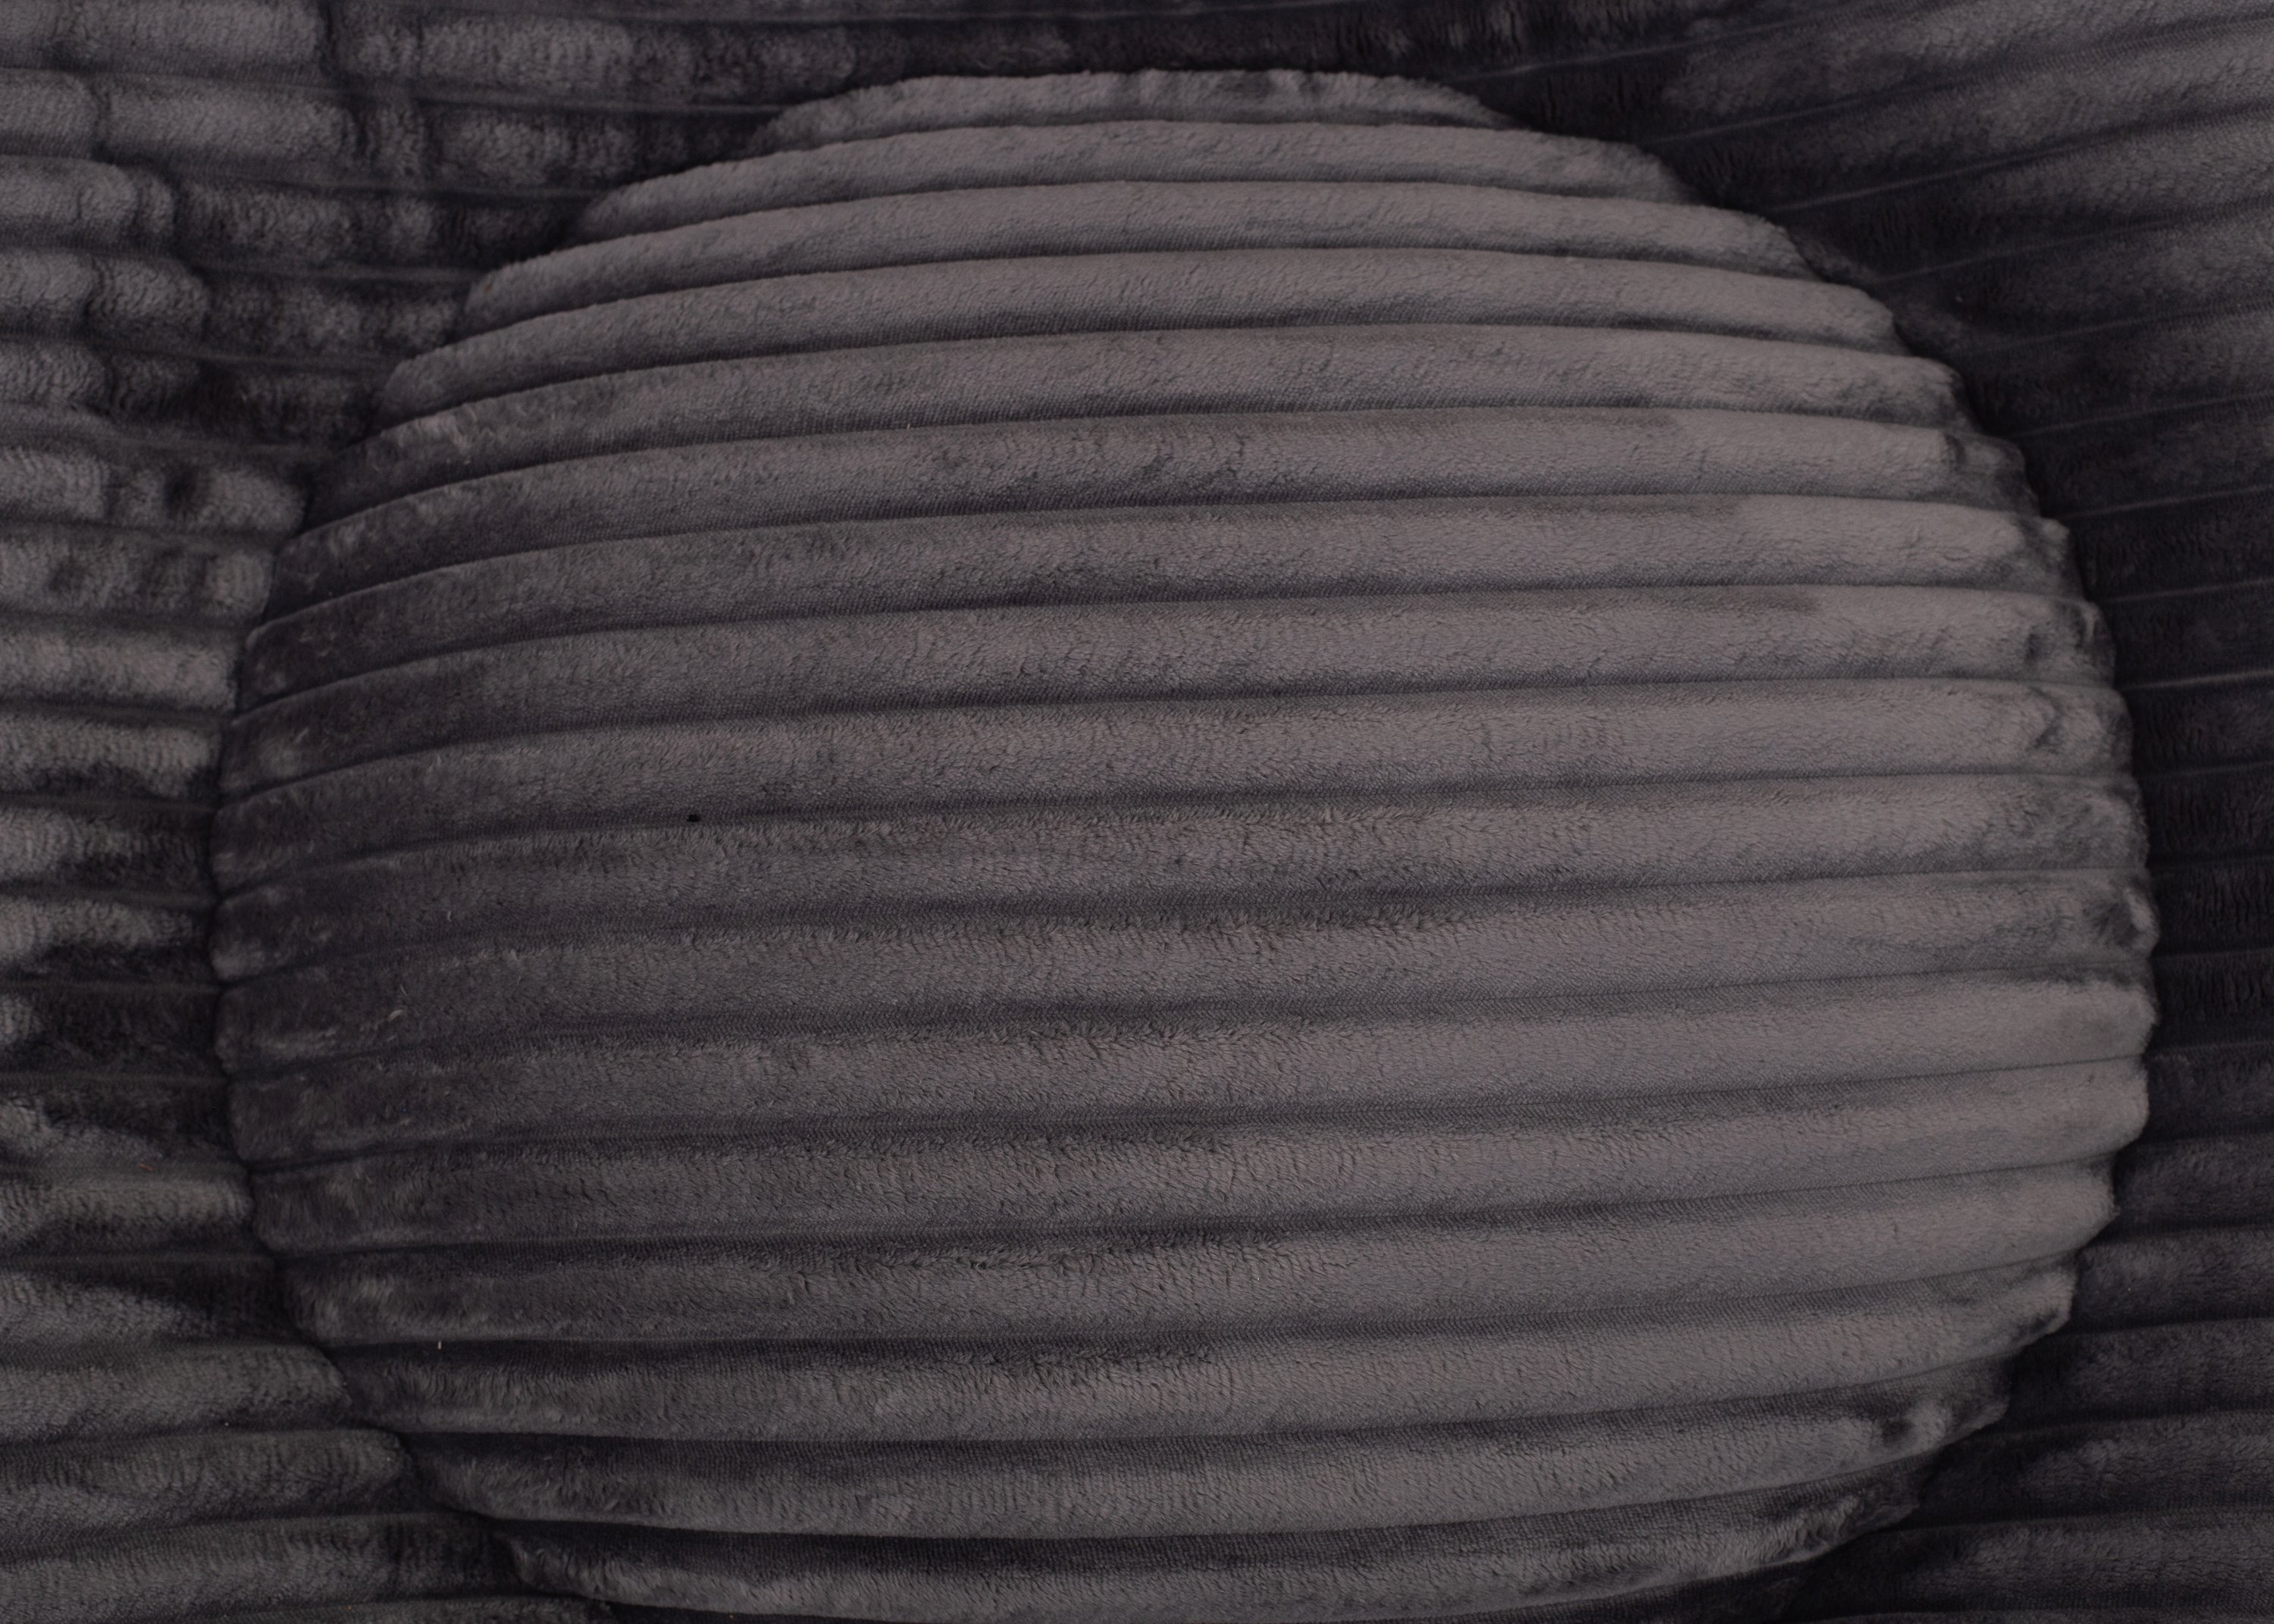 Wau-Bed Kuschelcord Dark Grey Oval-S (80x60cm)